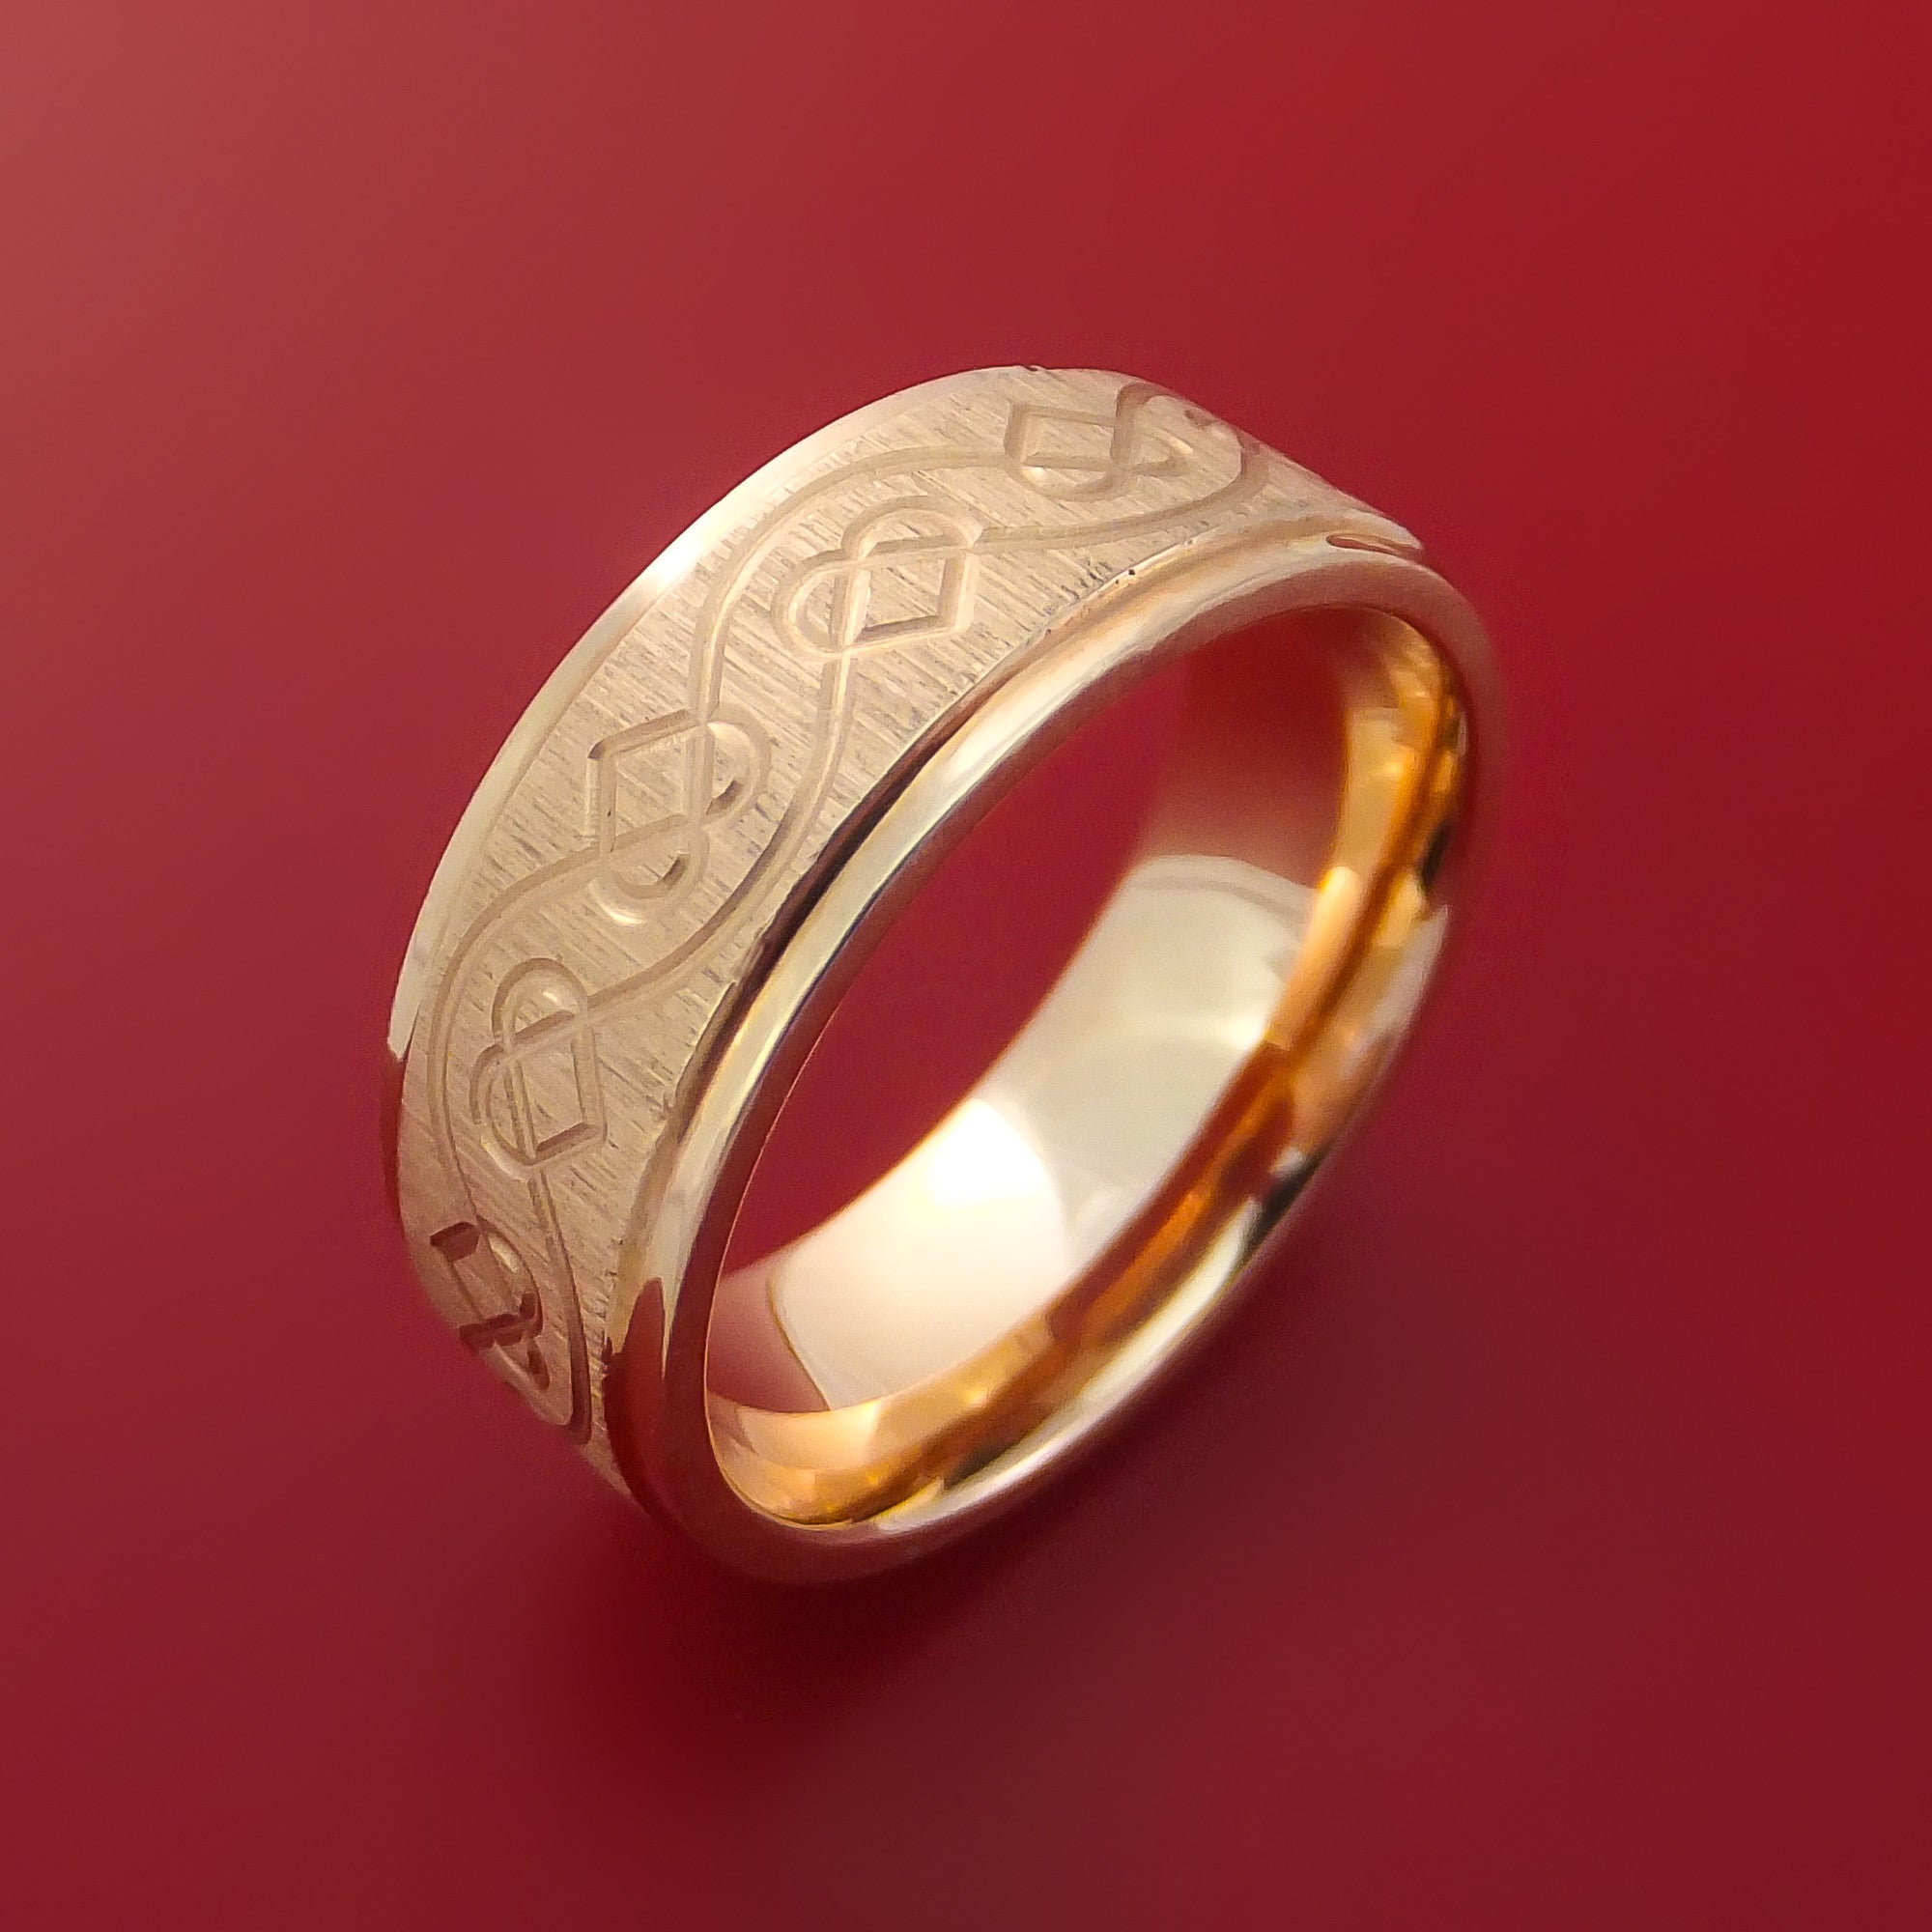 SALE - Flower Halo Engagement Ring - 14K Rose Gold Ring - Art Deco Wed